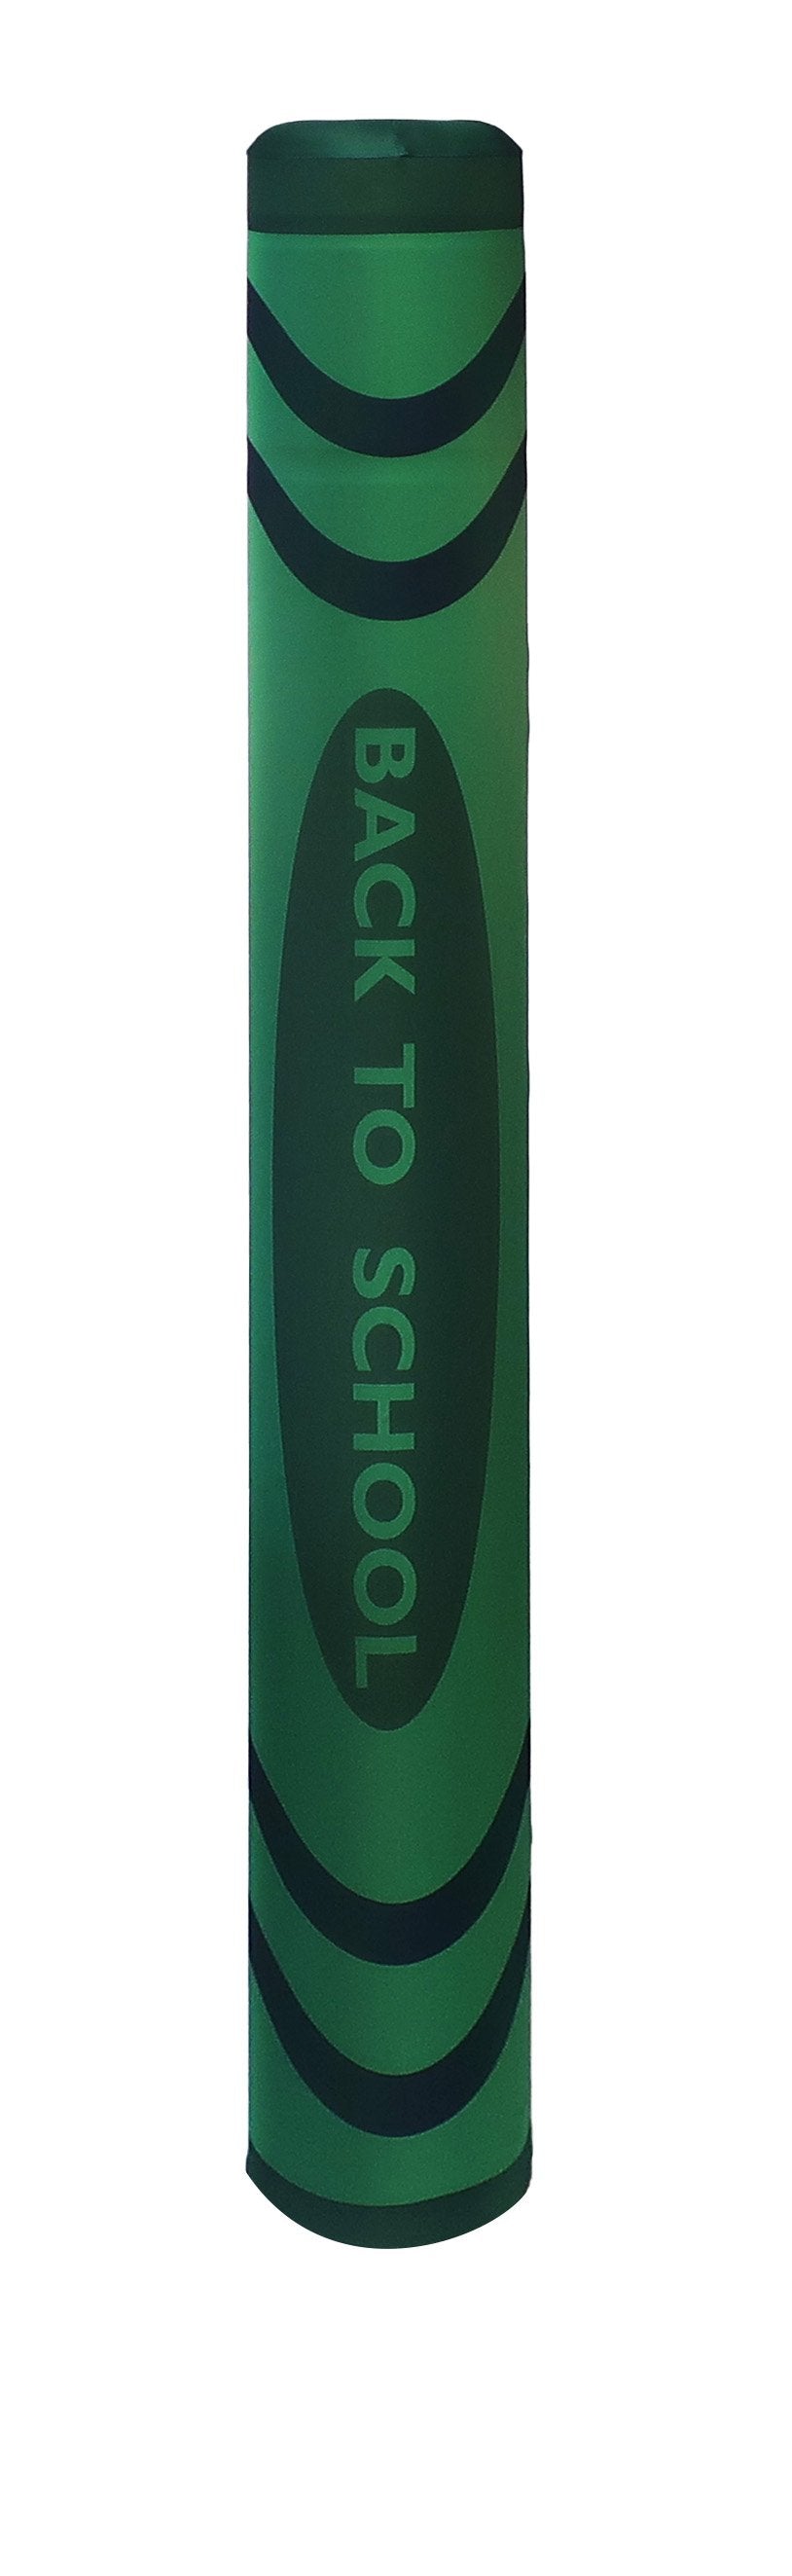 Back To School - Crayon bollard cover - green